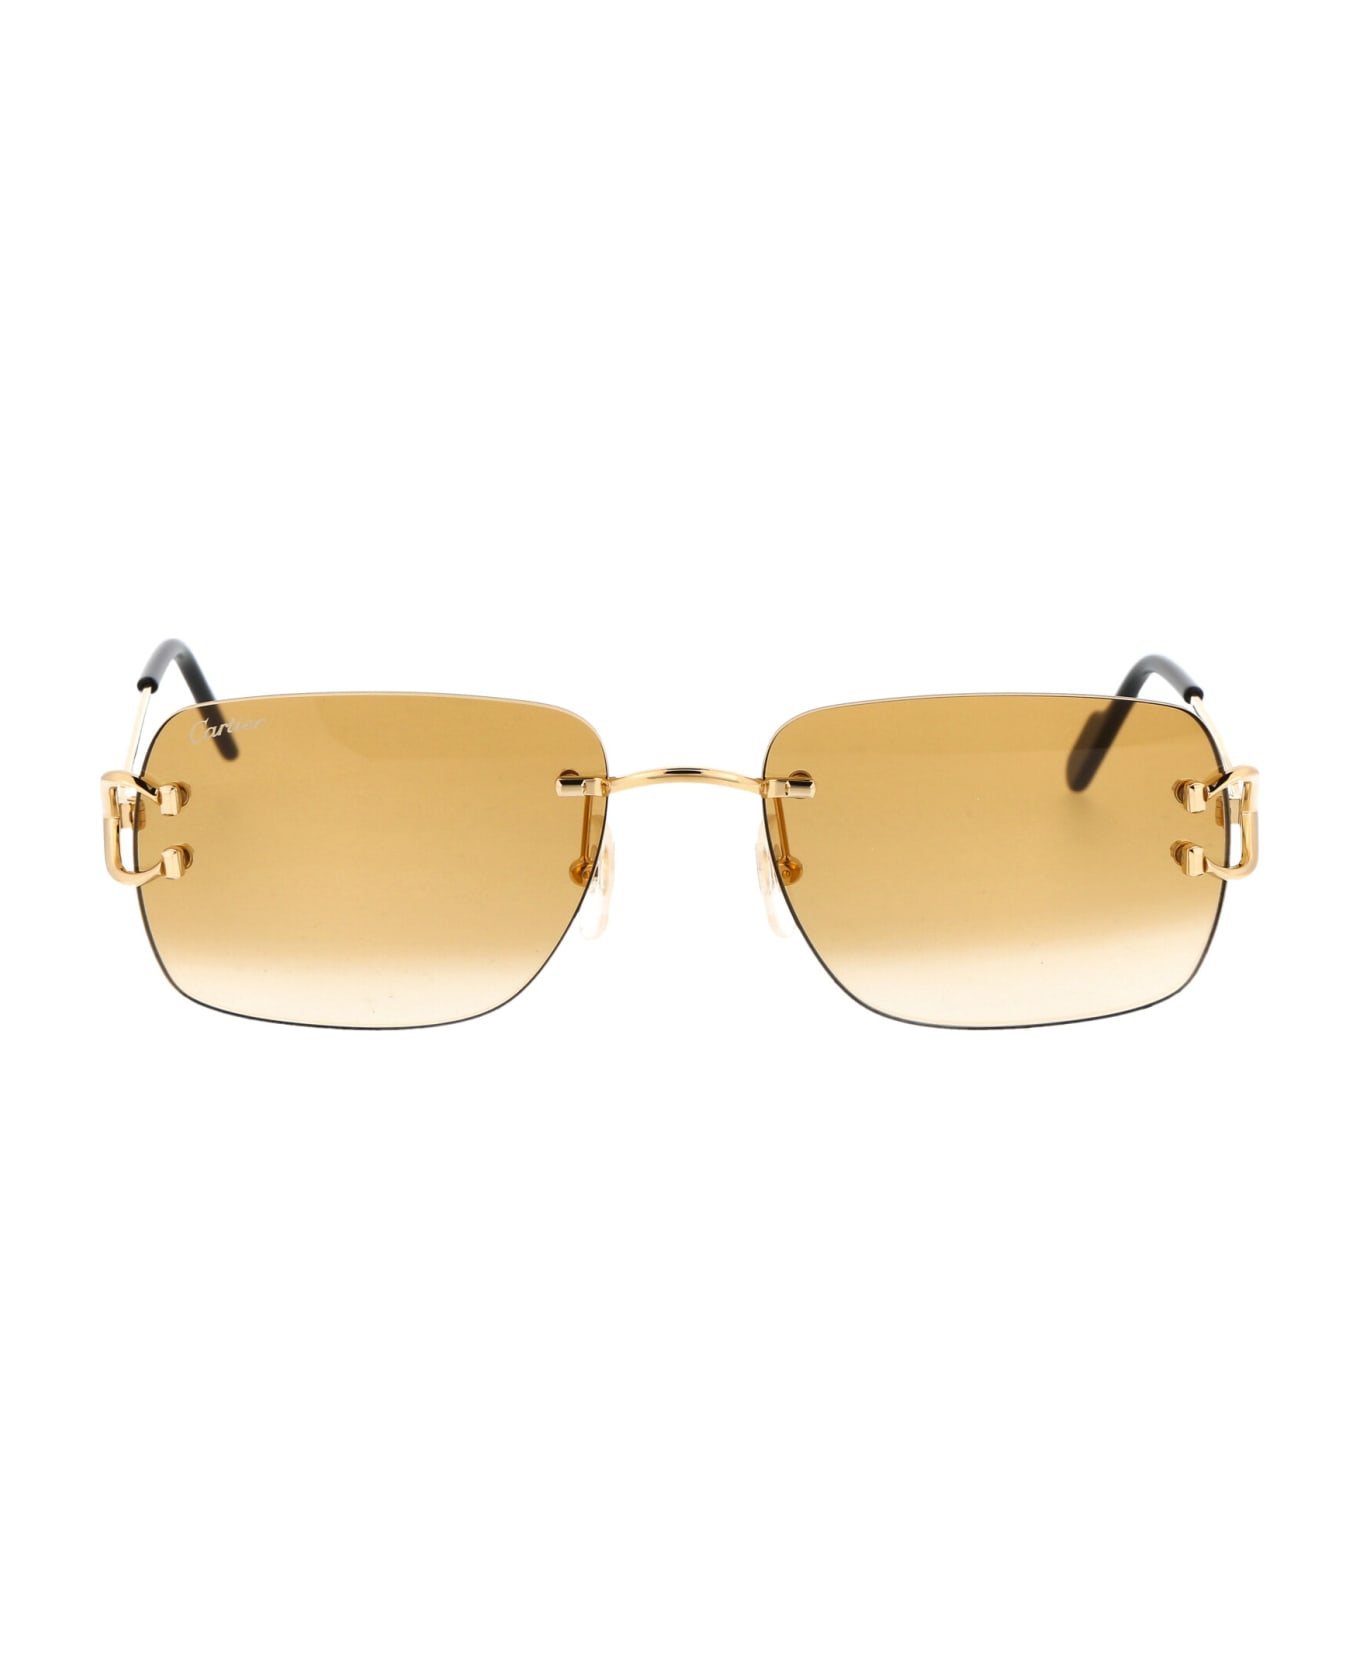 Cartier Eyewear Ct0330s Sunglasses - 003 GOLD GOLD YELLOW